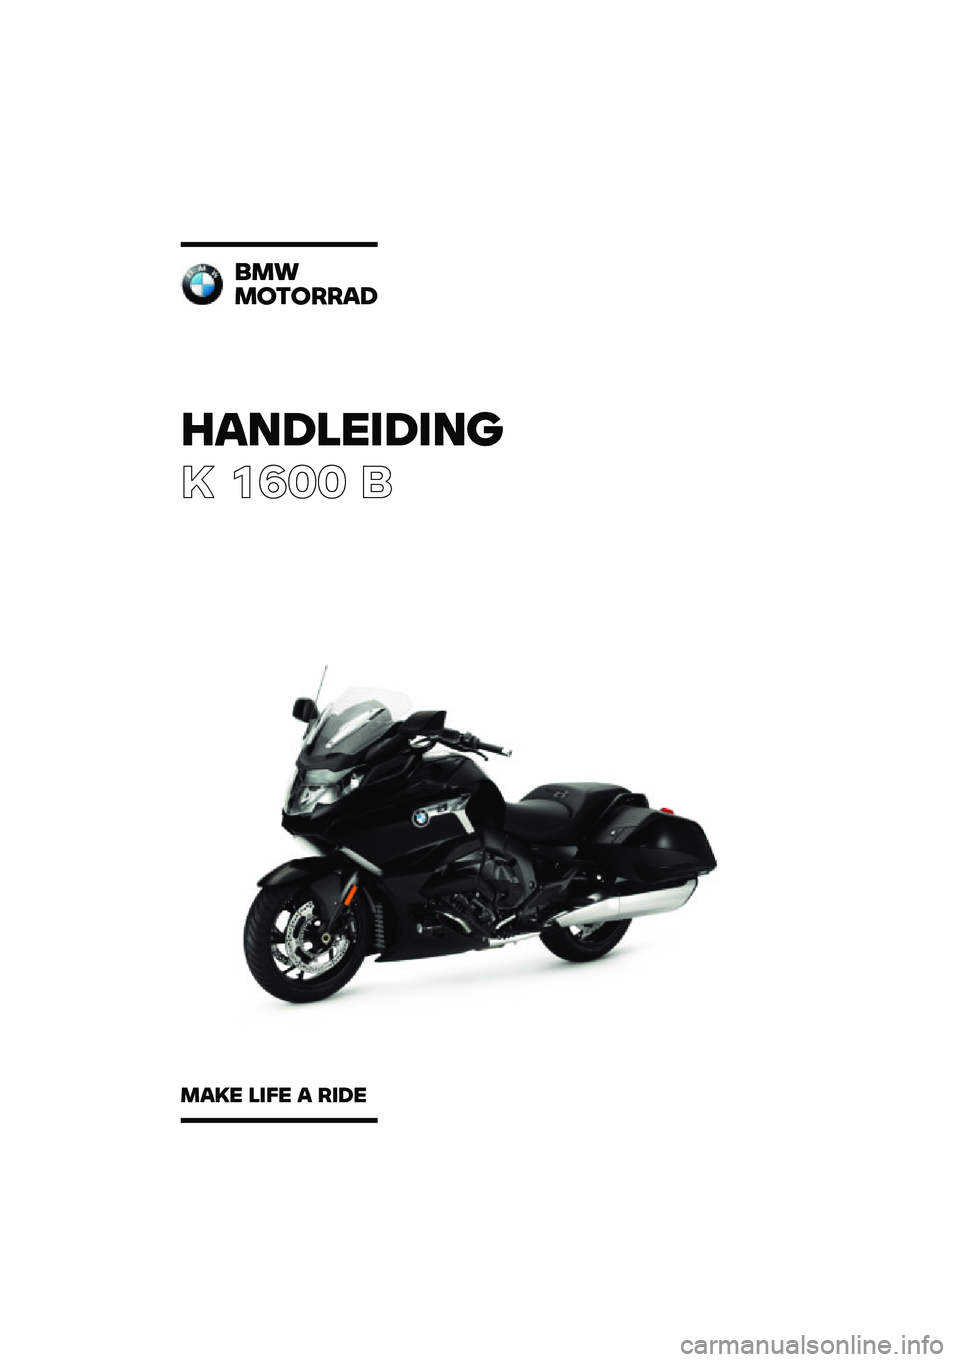 BMW MOTORRAD K 1600 B 2020  Handleiding (in Dutch) �������\b��\b��	
� ���� �	
�
��\f
��
��
����
���� ��\b�� � ��\b�� 